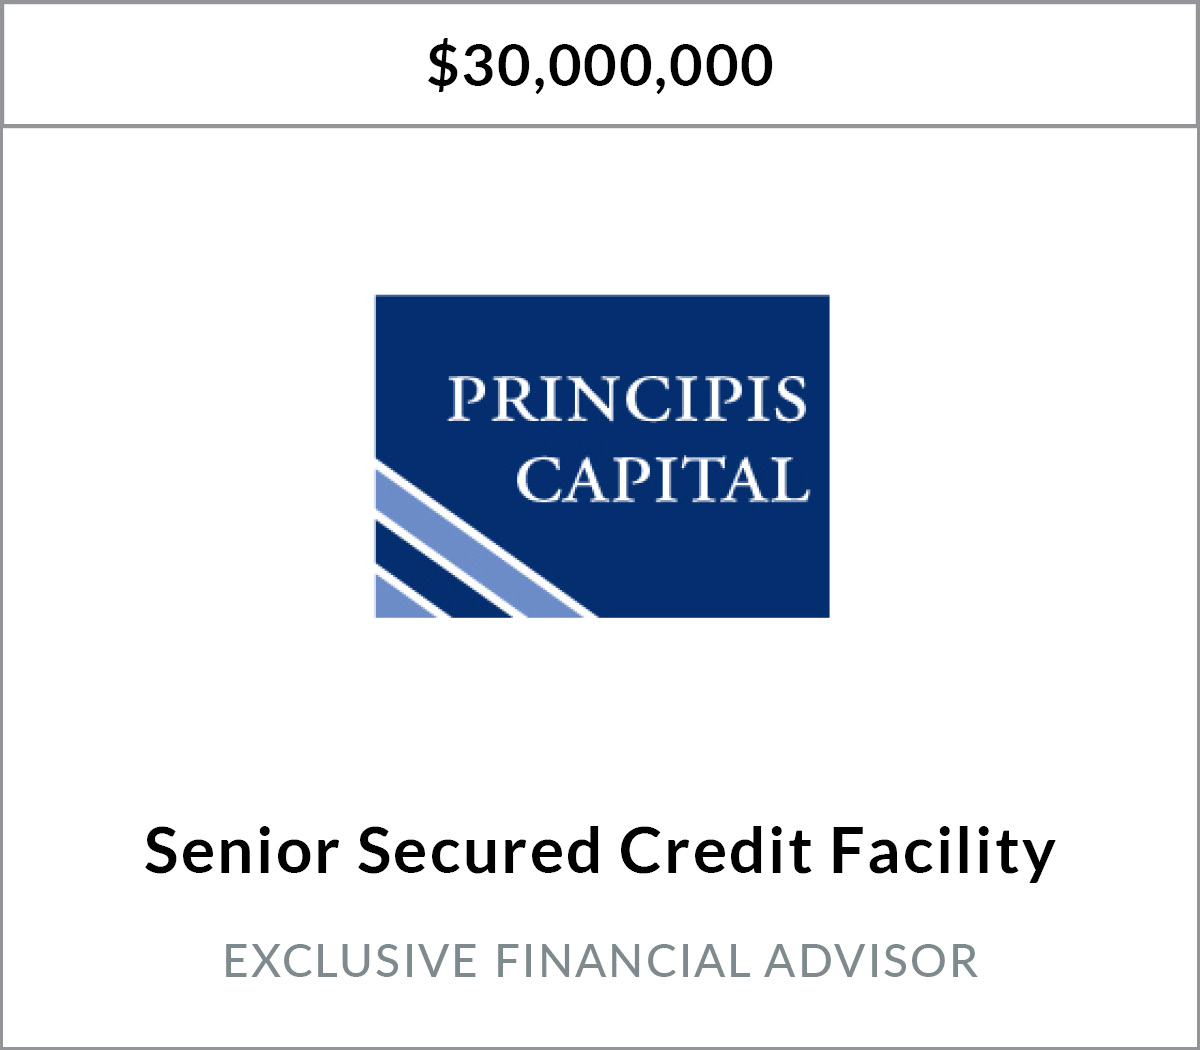 BPC Arranges Senior Secured Credit Facility for Principis Capital